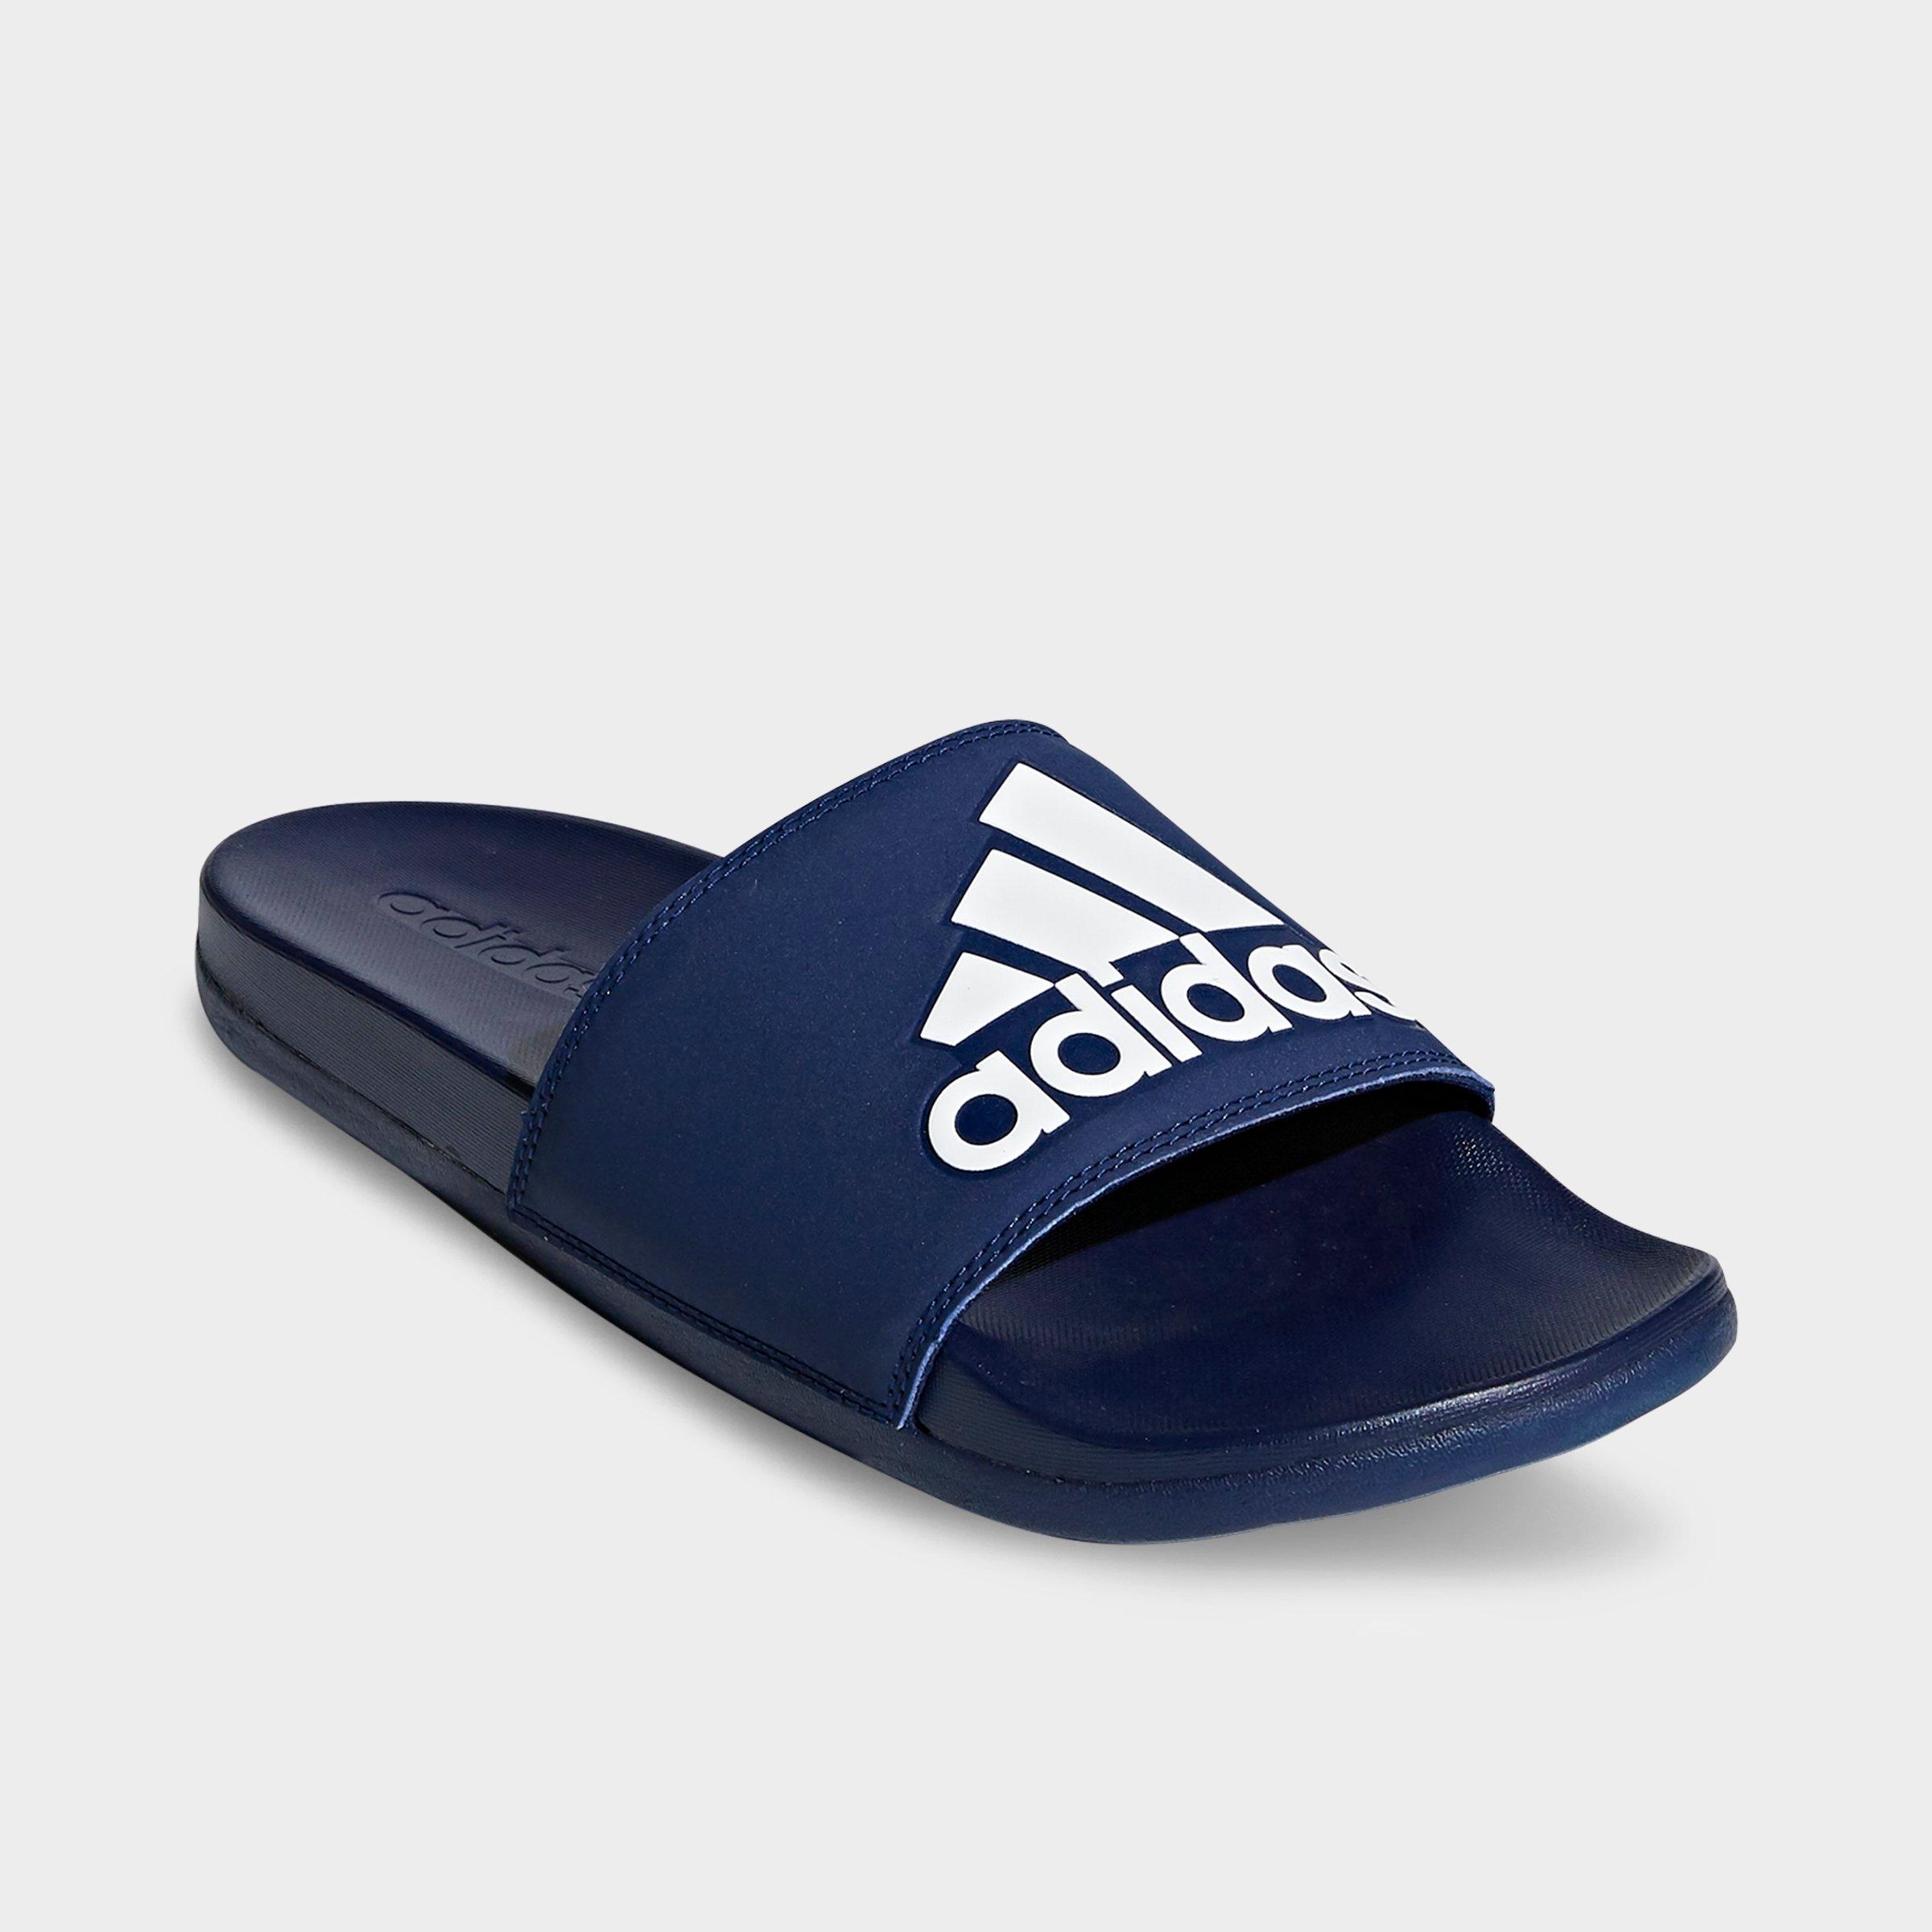 adidas men's cloudfoam sandals